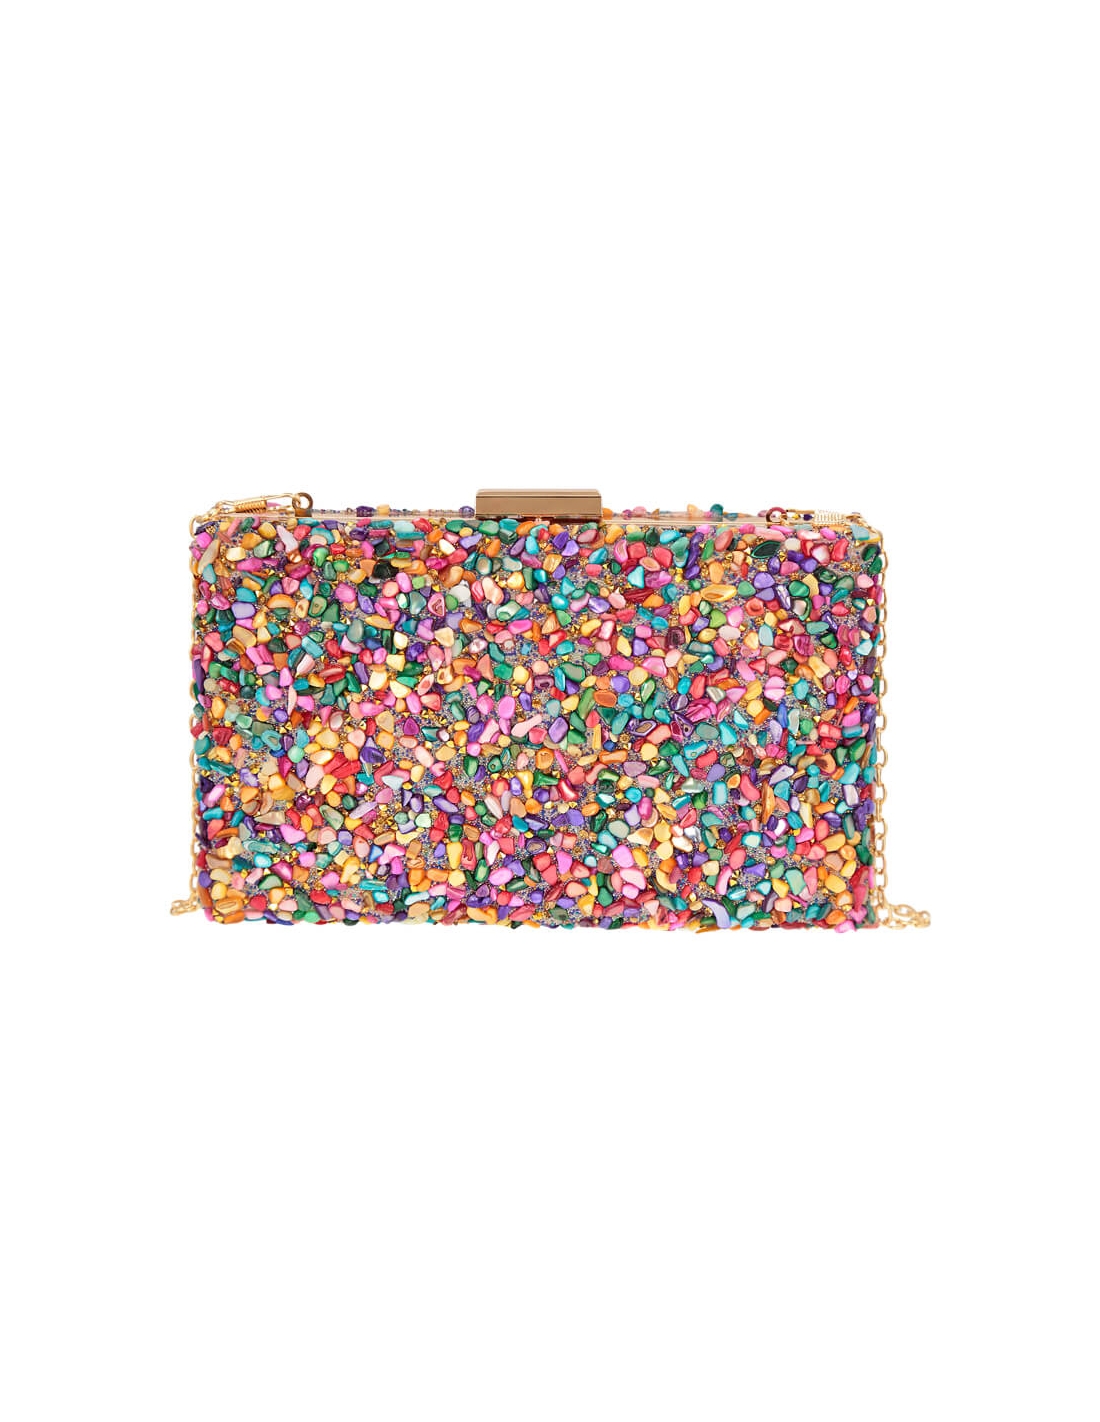 Bolsos Mujer Multicolor – Clutch Invitada Boda –